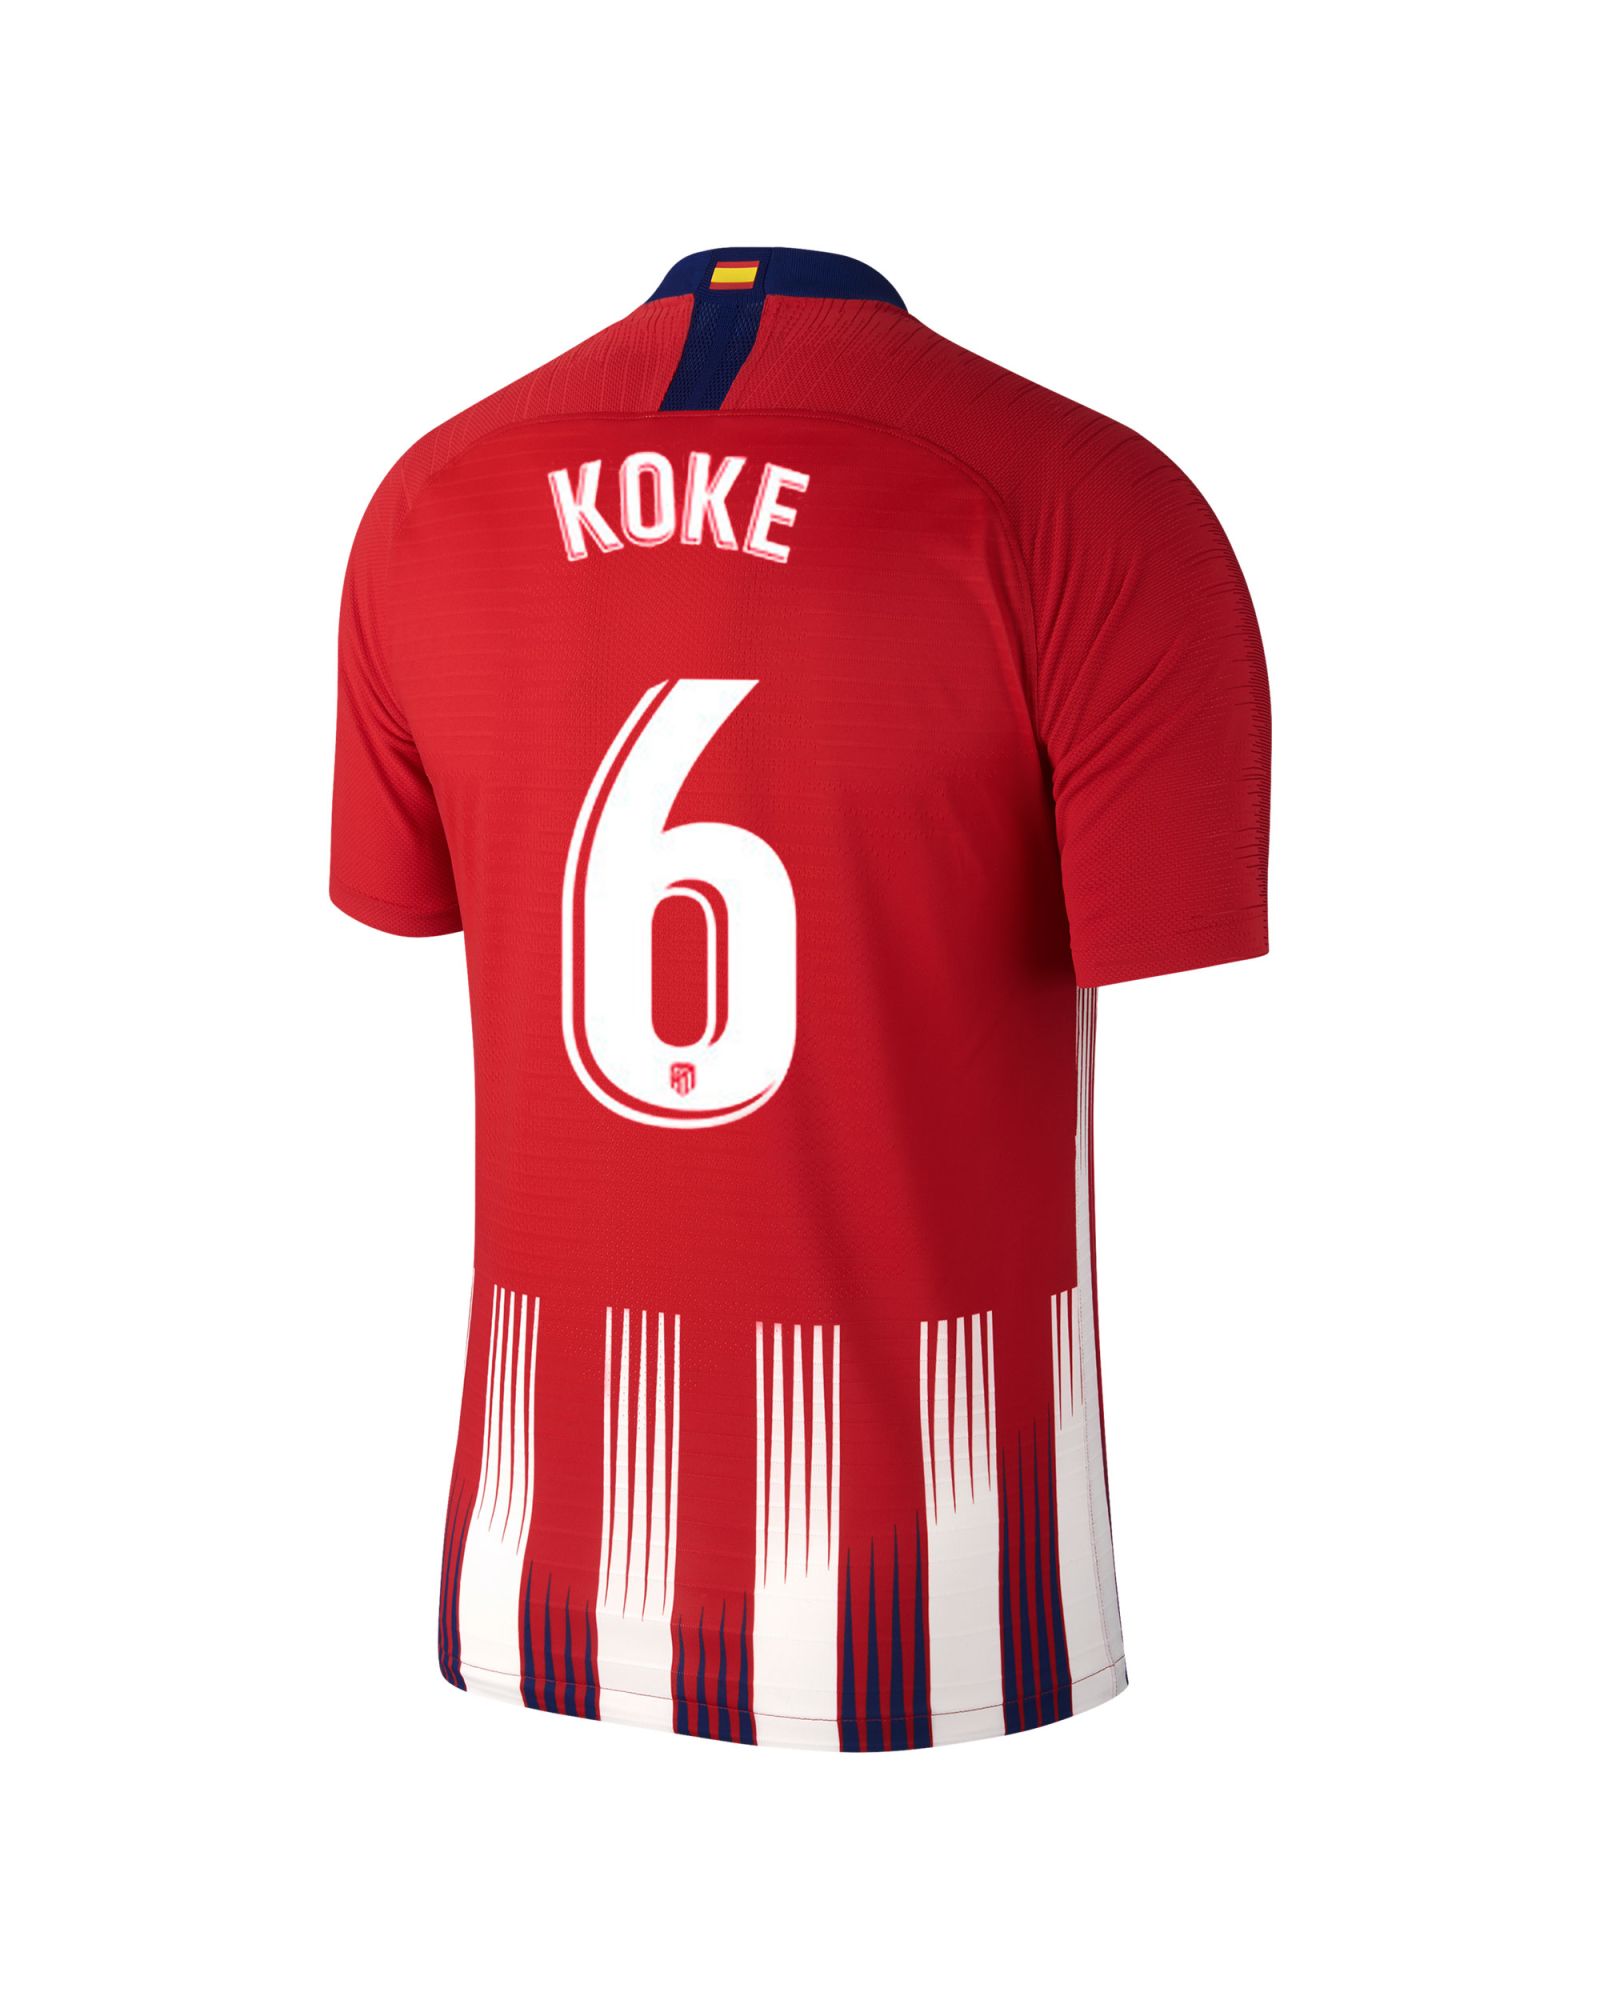 Camiseta 1ª Atlético de Madrid 2018/2019 Vapor Match Koke - Fútbol Factory